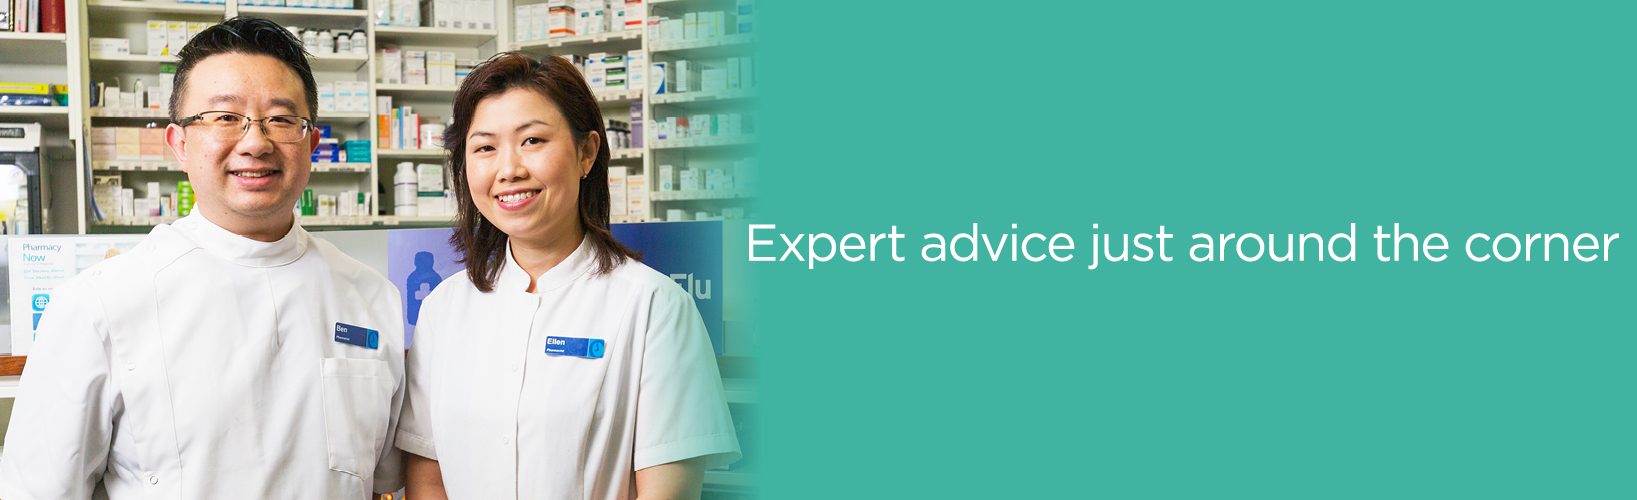 Pharmacy Choice - Expert advice just around the corner